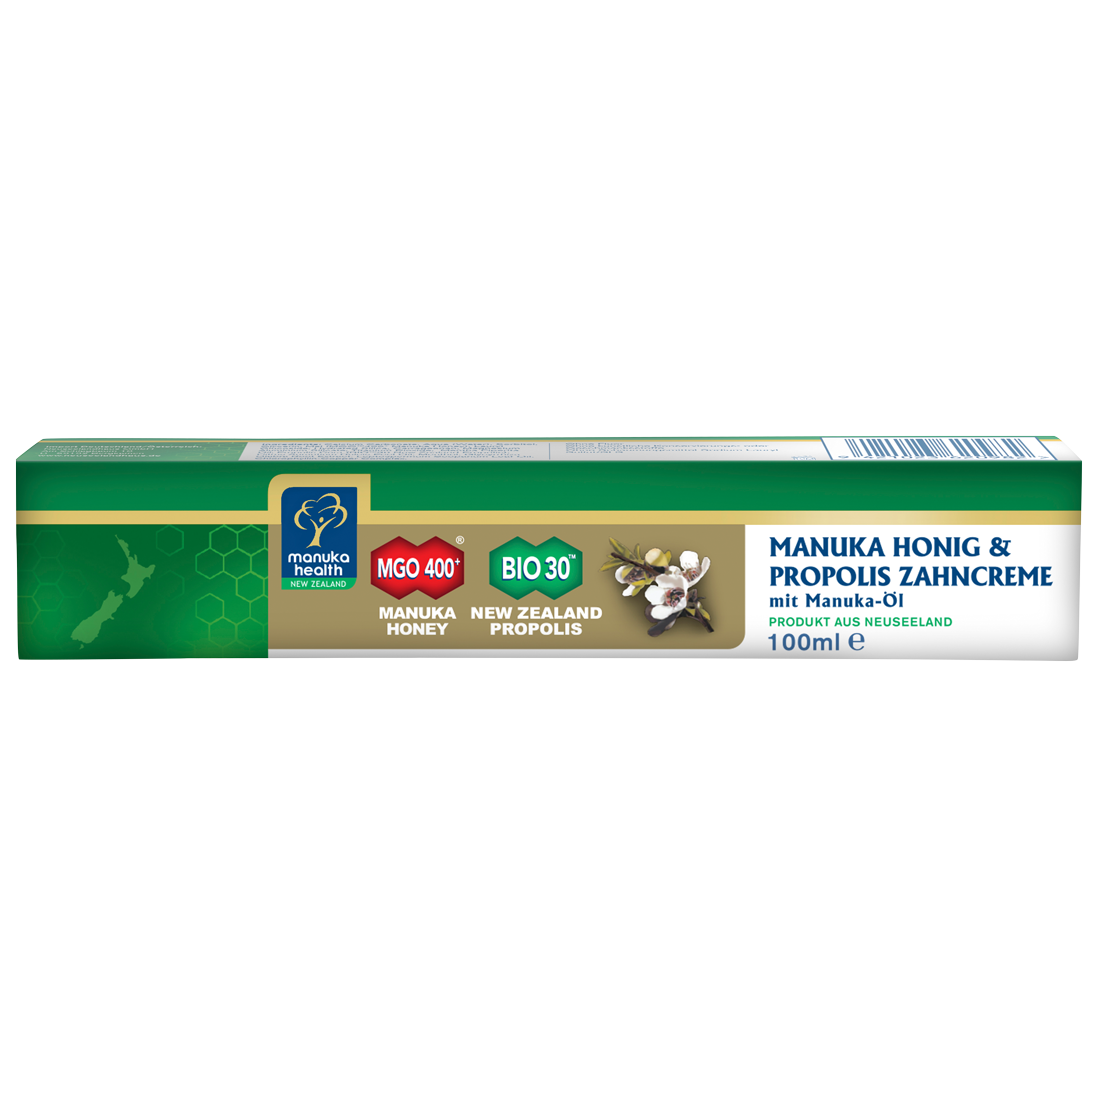 Manuka Health - Manuka Honig & Propolis Zahncreme MGO 400+ Karton vorne